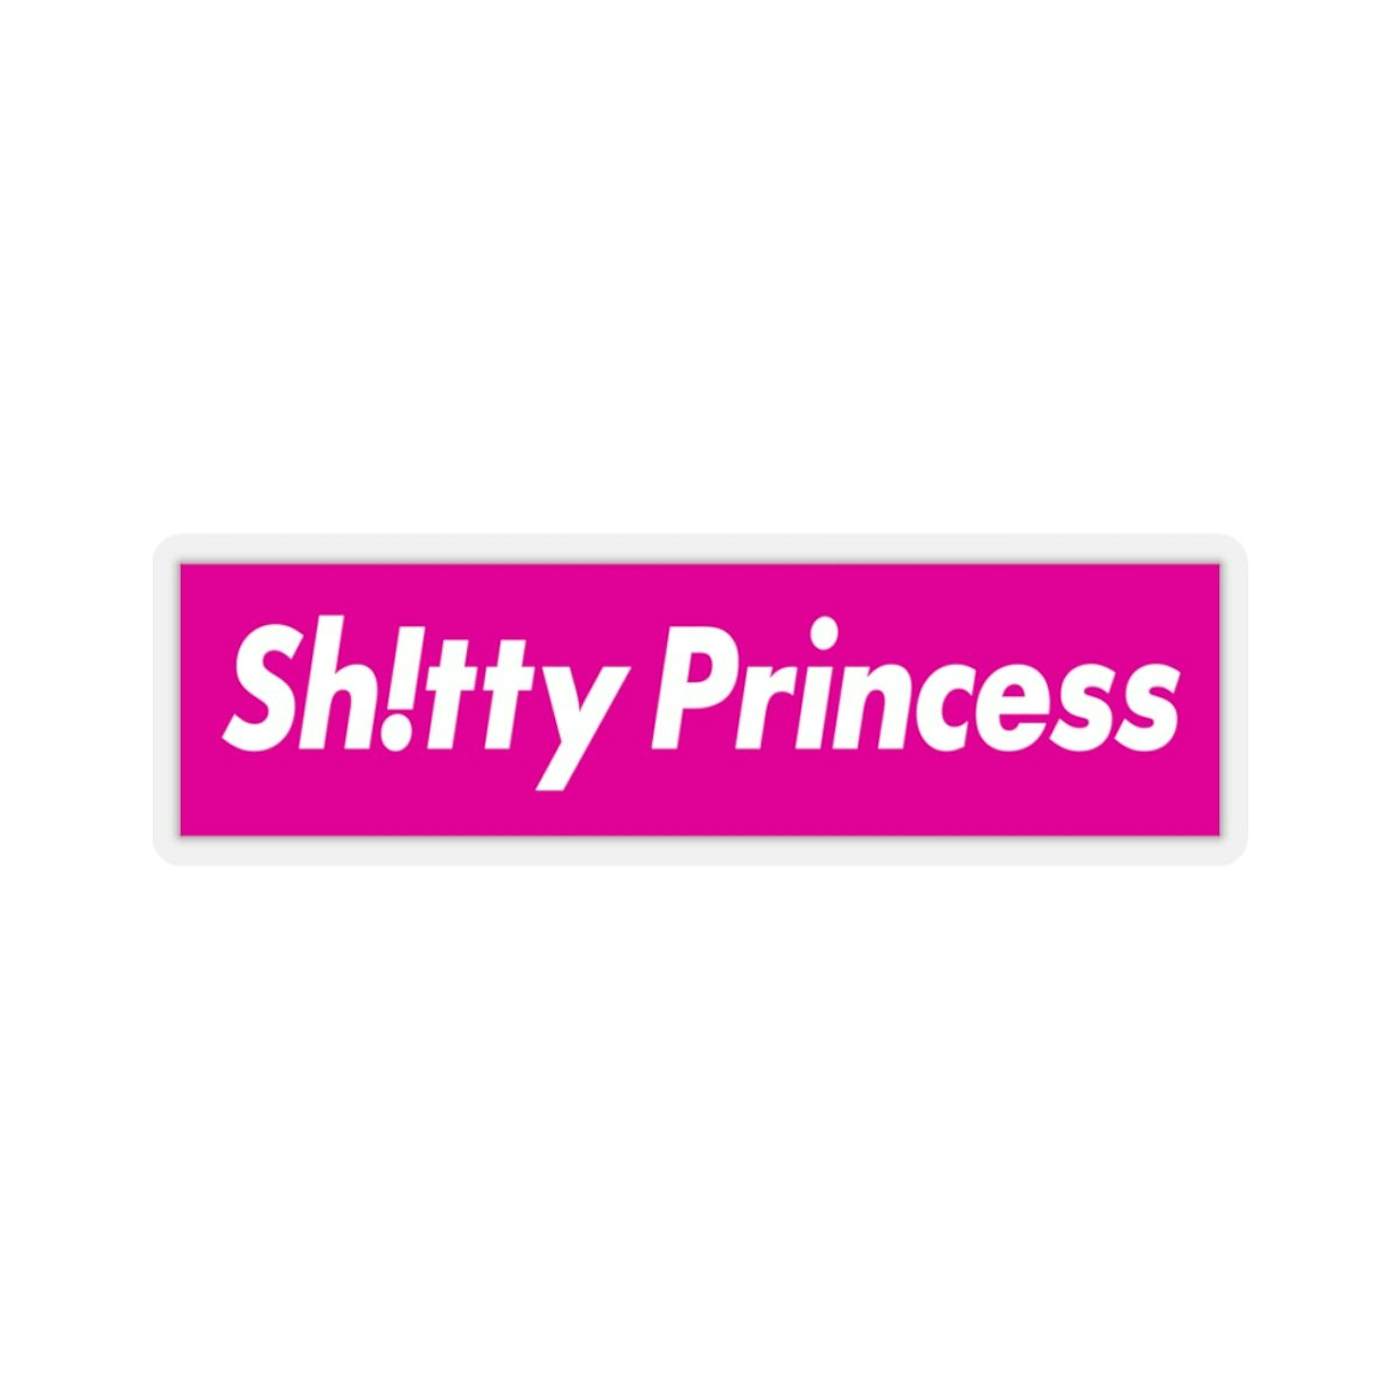 Kiss-Cut Stickers in Shitty Princess Pink Logo